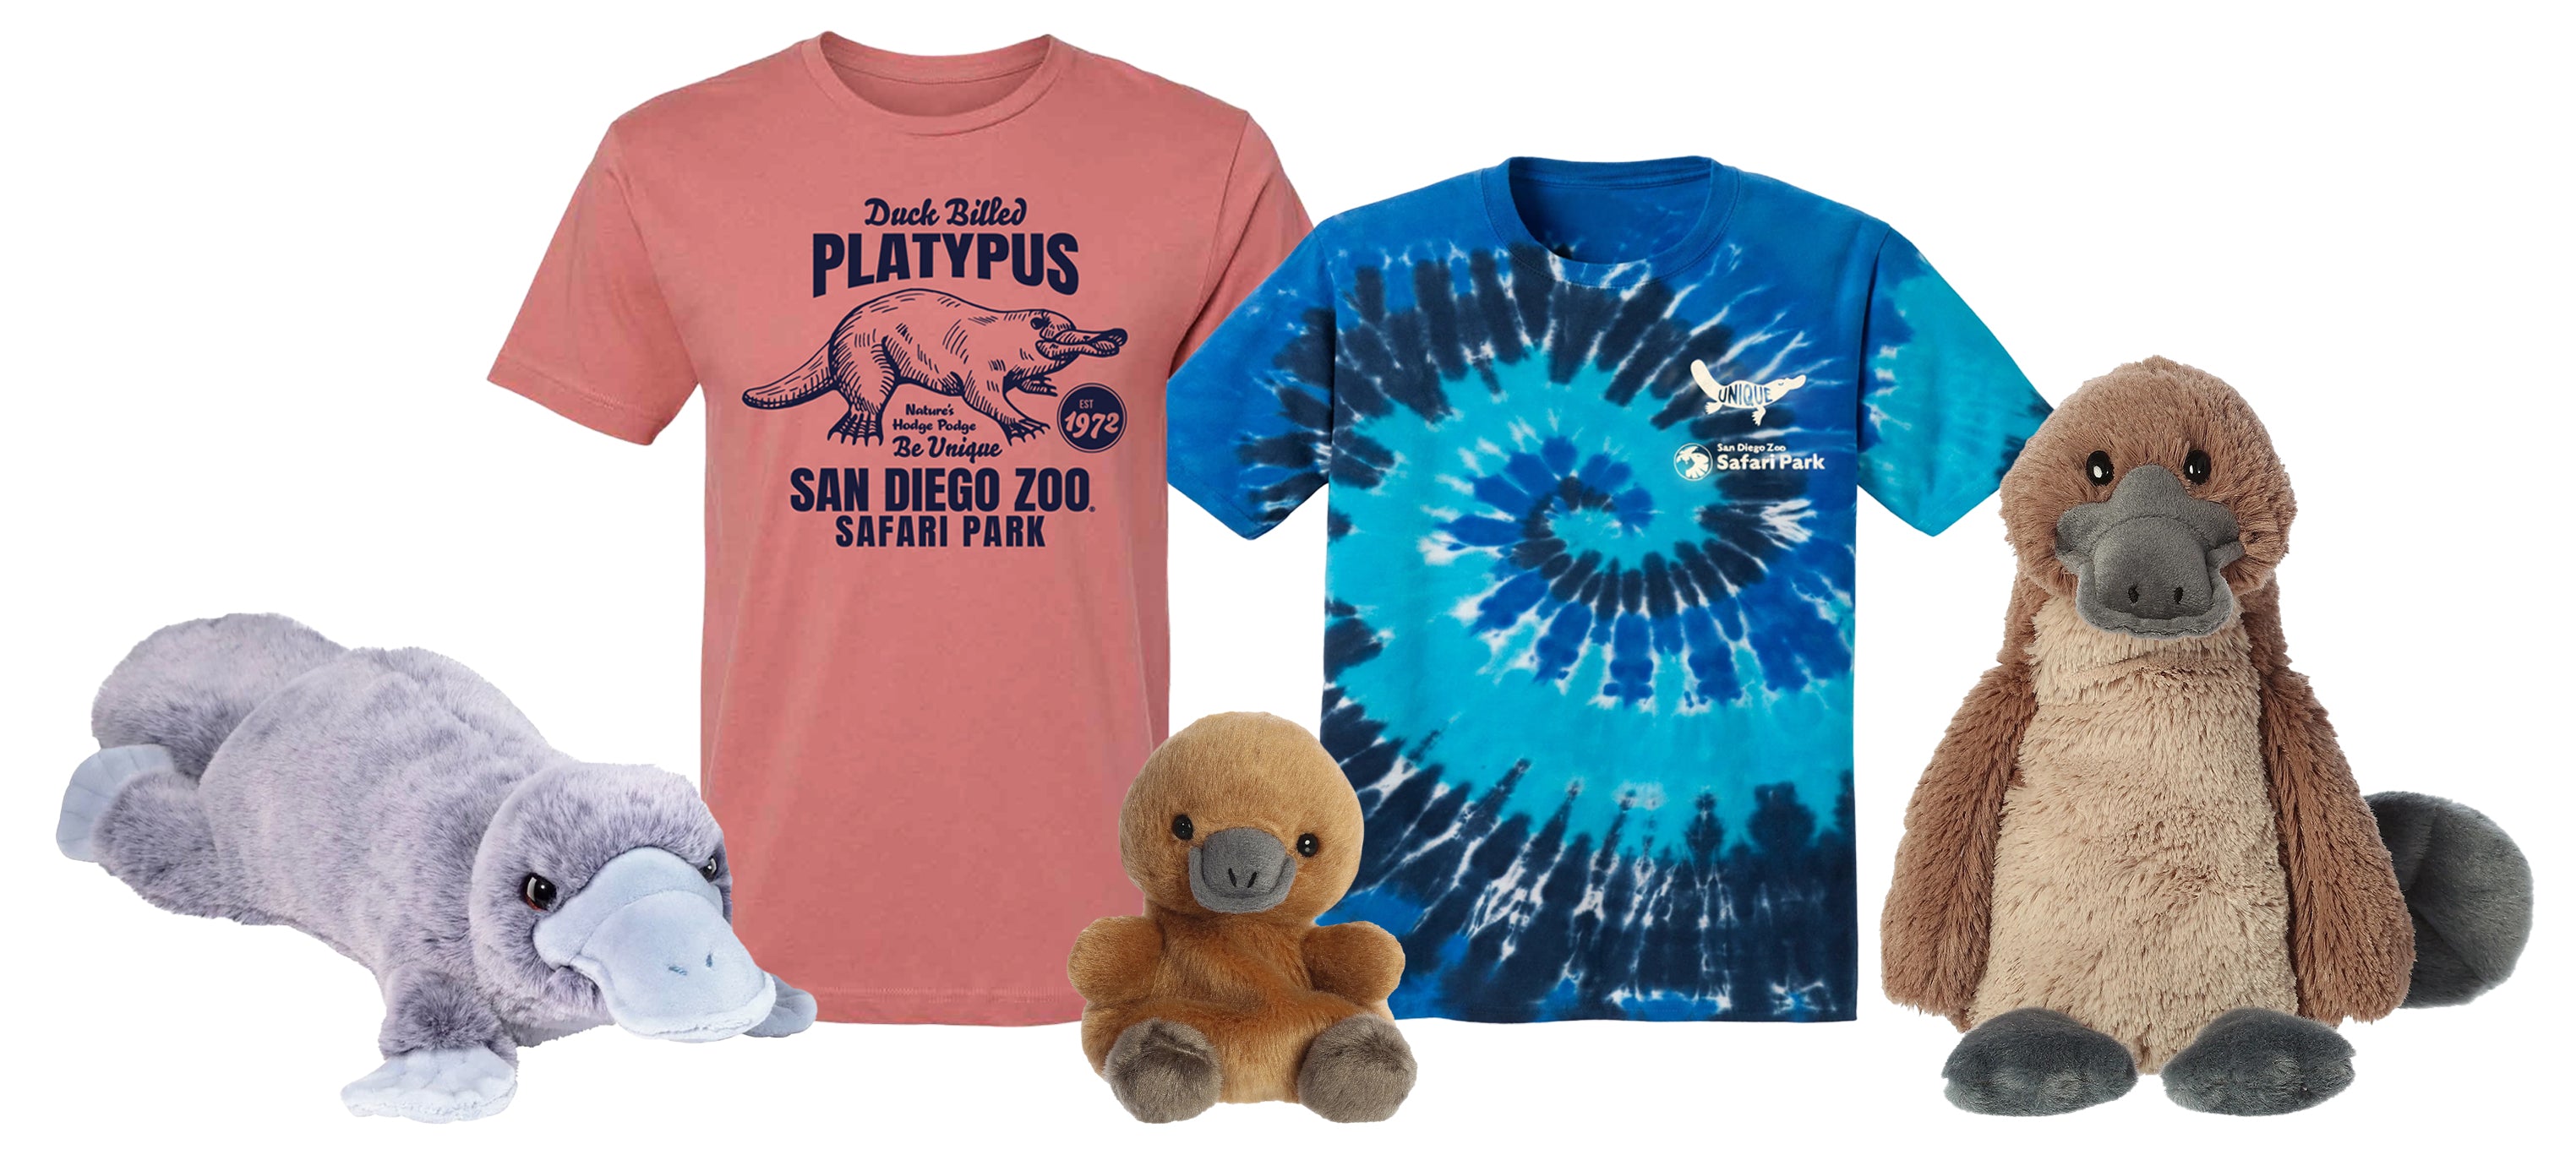 Platypus Merchandise Collection